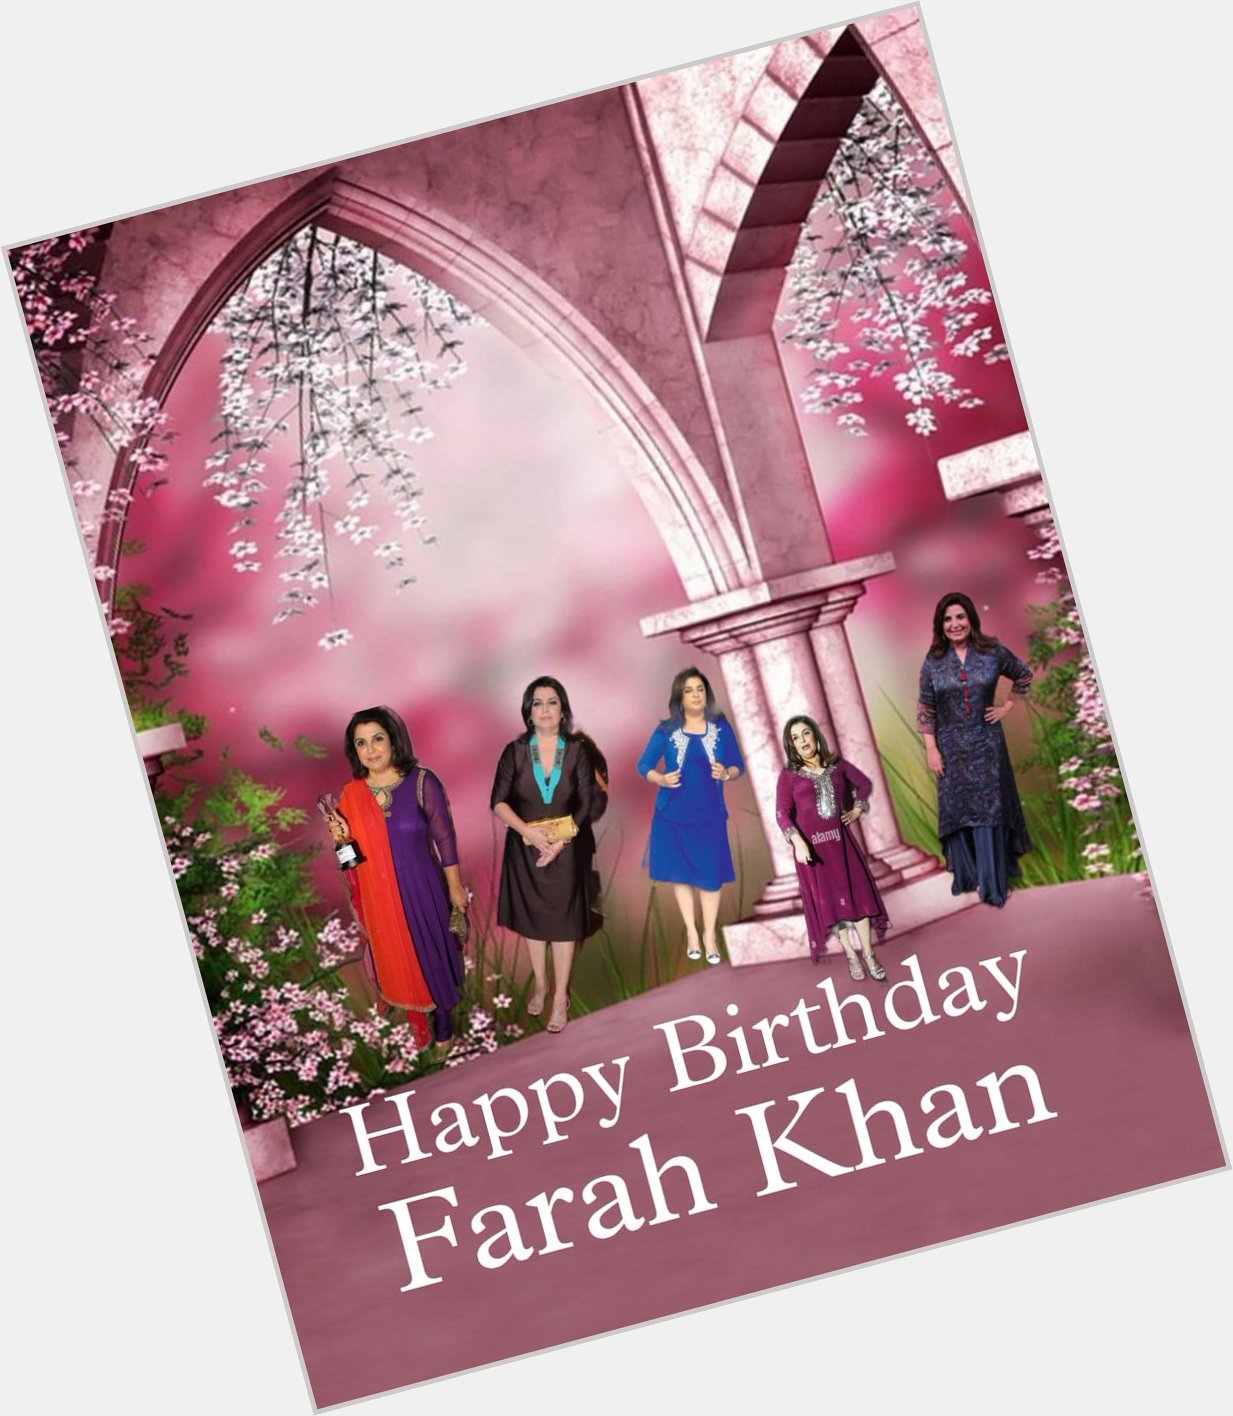 Happy Birthday
Farah khan   